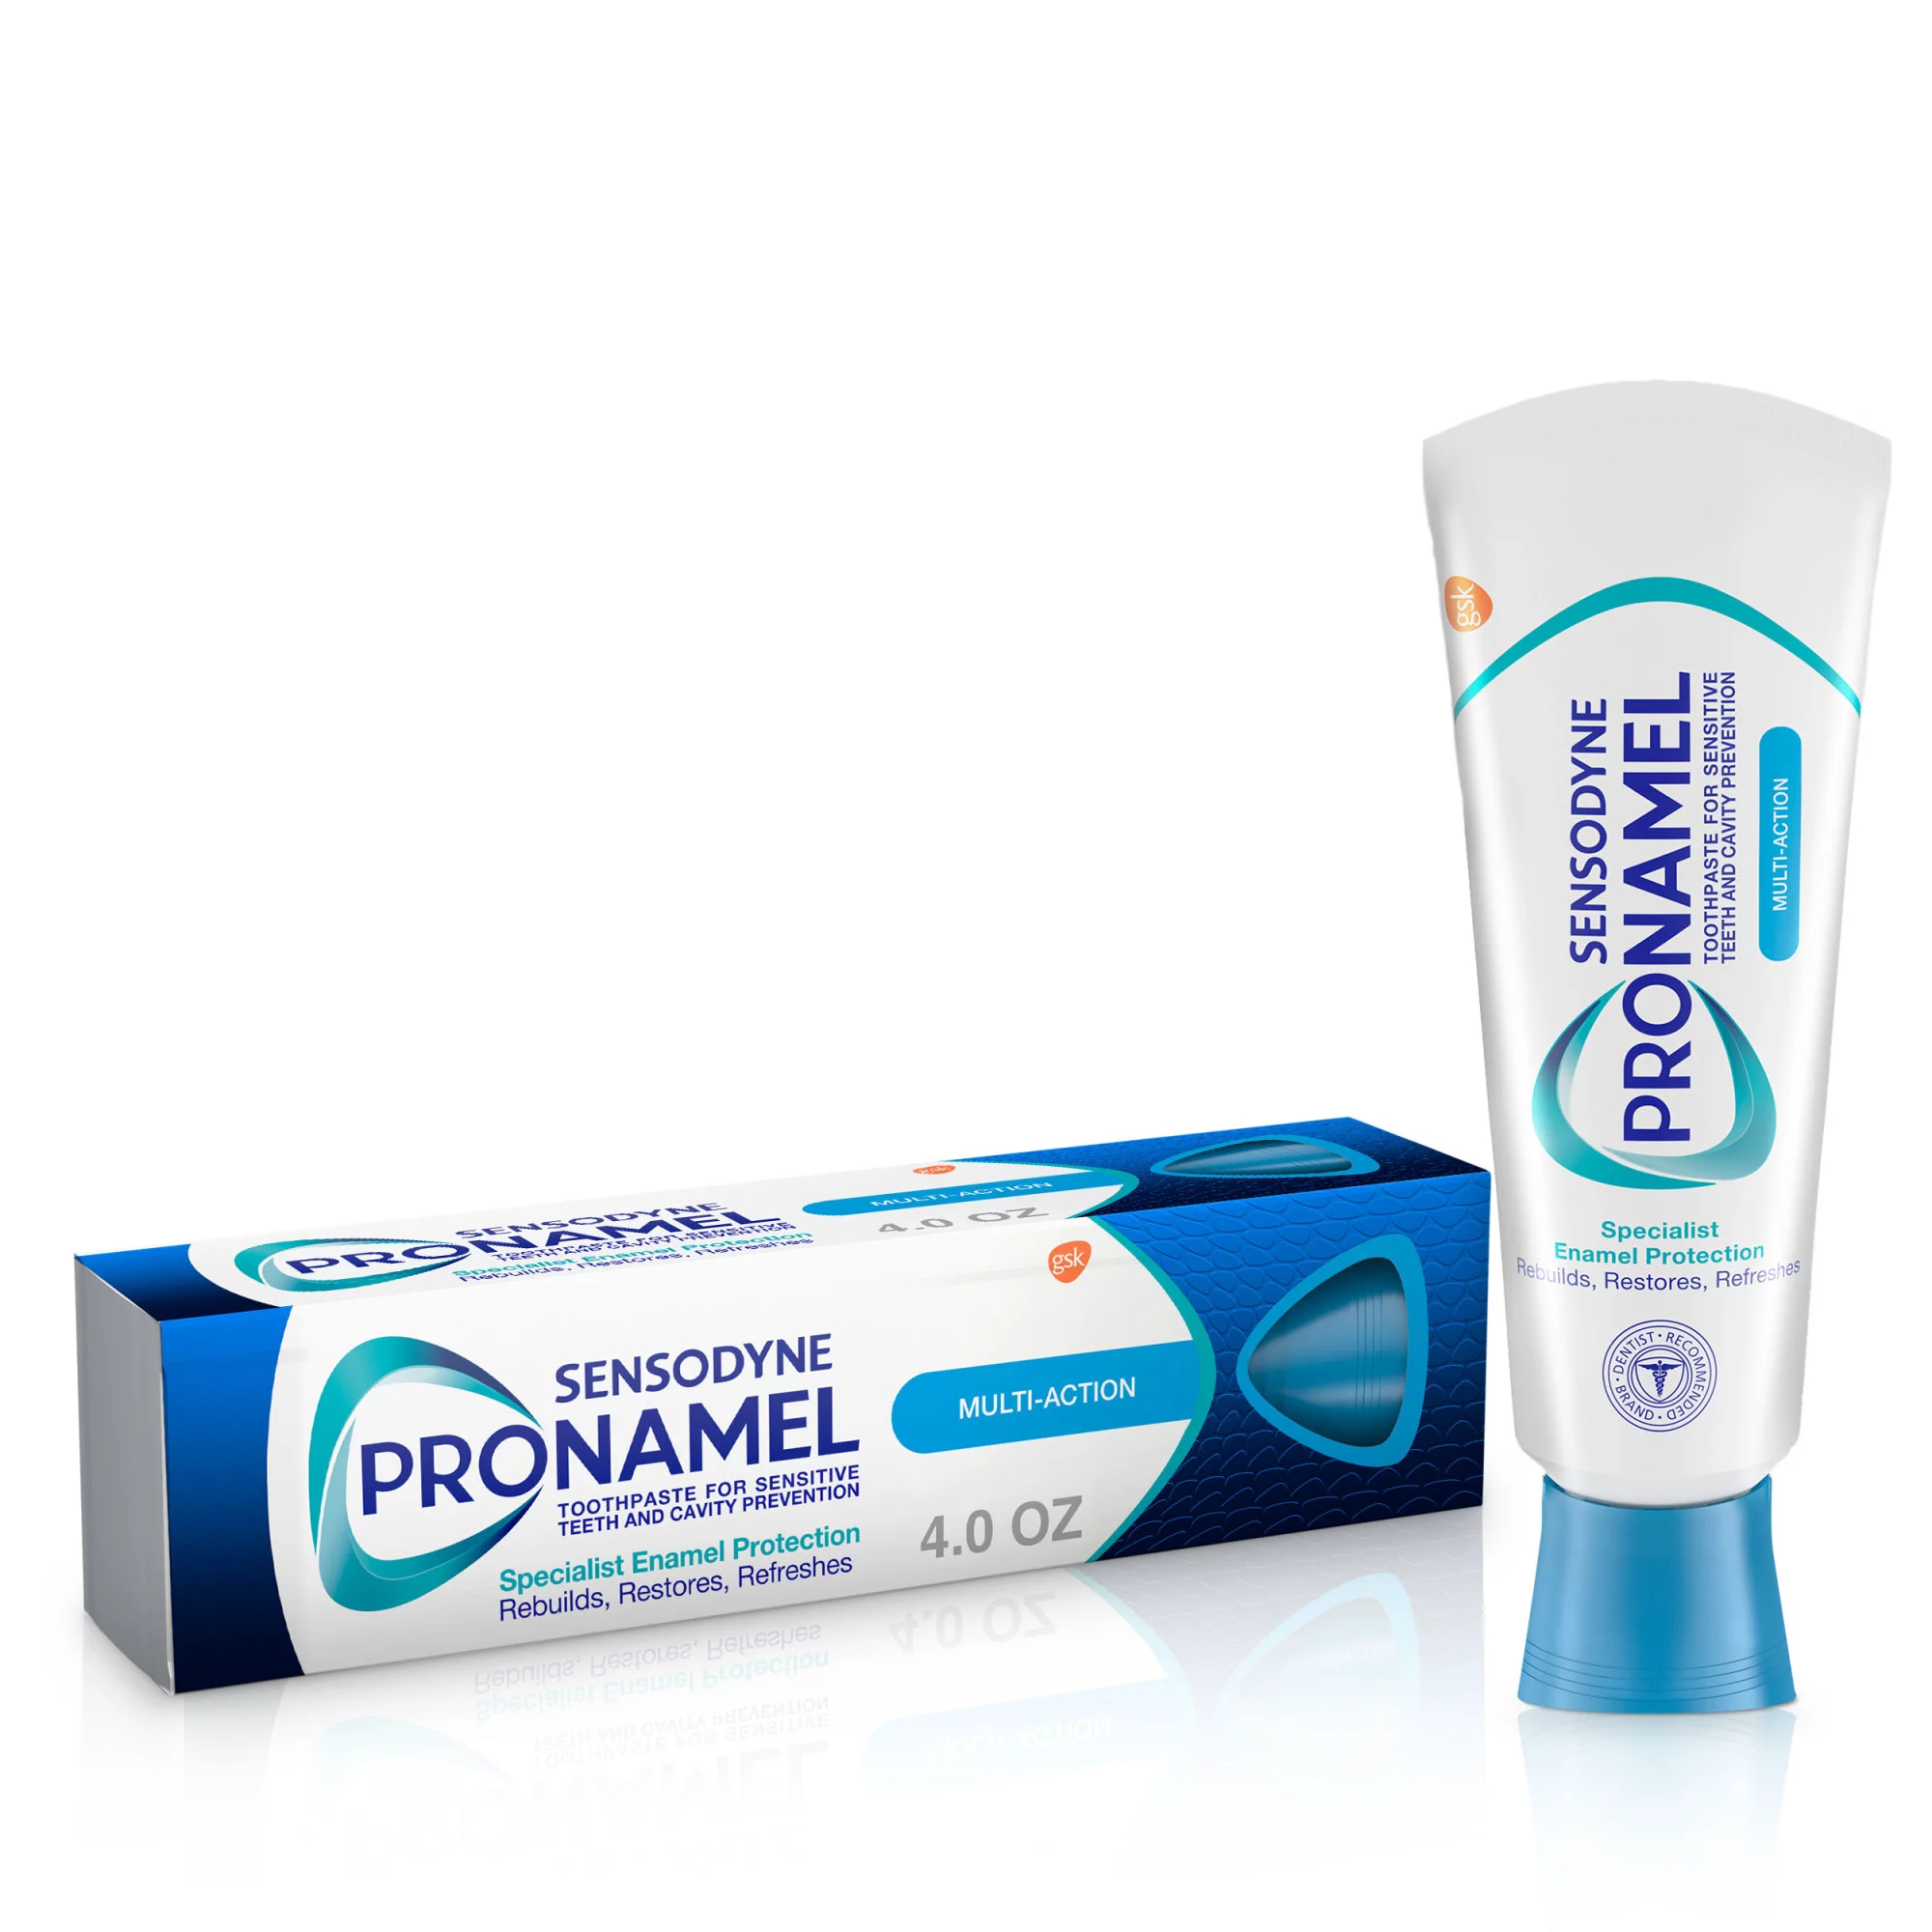 Sensodyne Pronamel Multi Action Sensitive Toothpaste Cleansing Mint 4 Oz 0e7cf547 b6a8 4a0a bdb0 3ab68411342b.44d0799faf4cad21eabdc918833f99d9